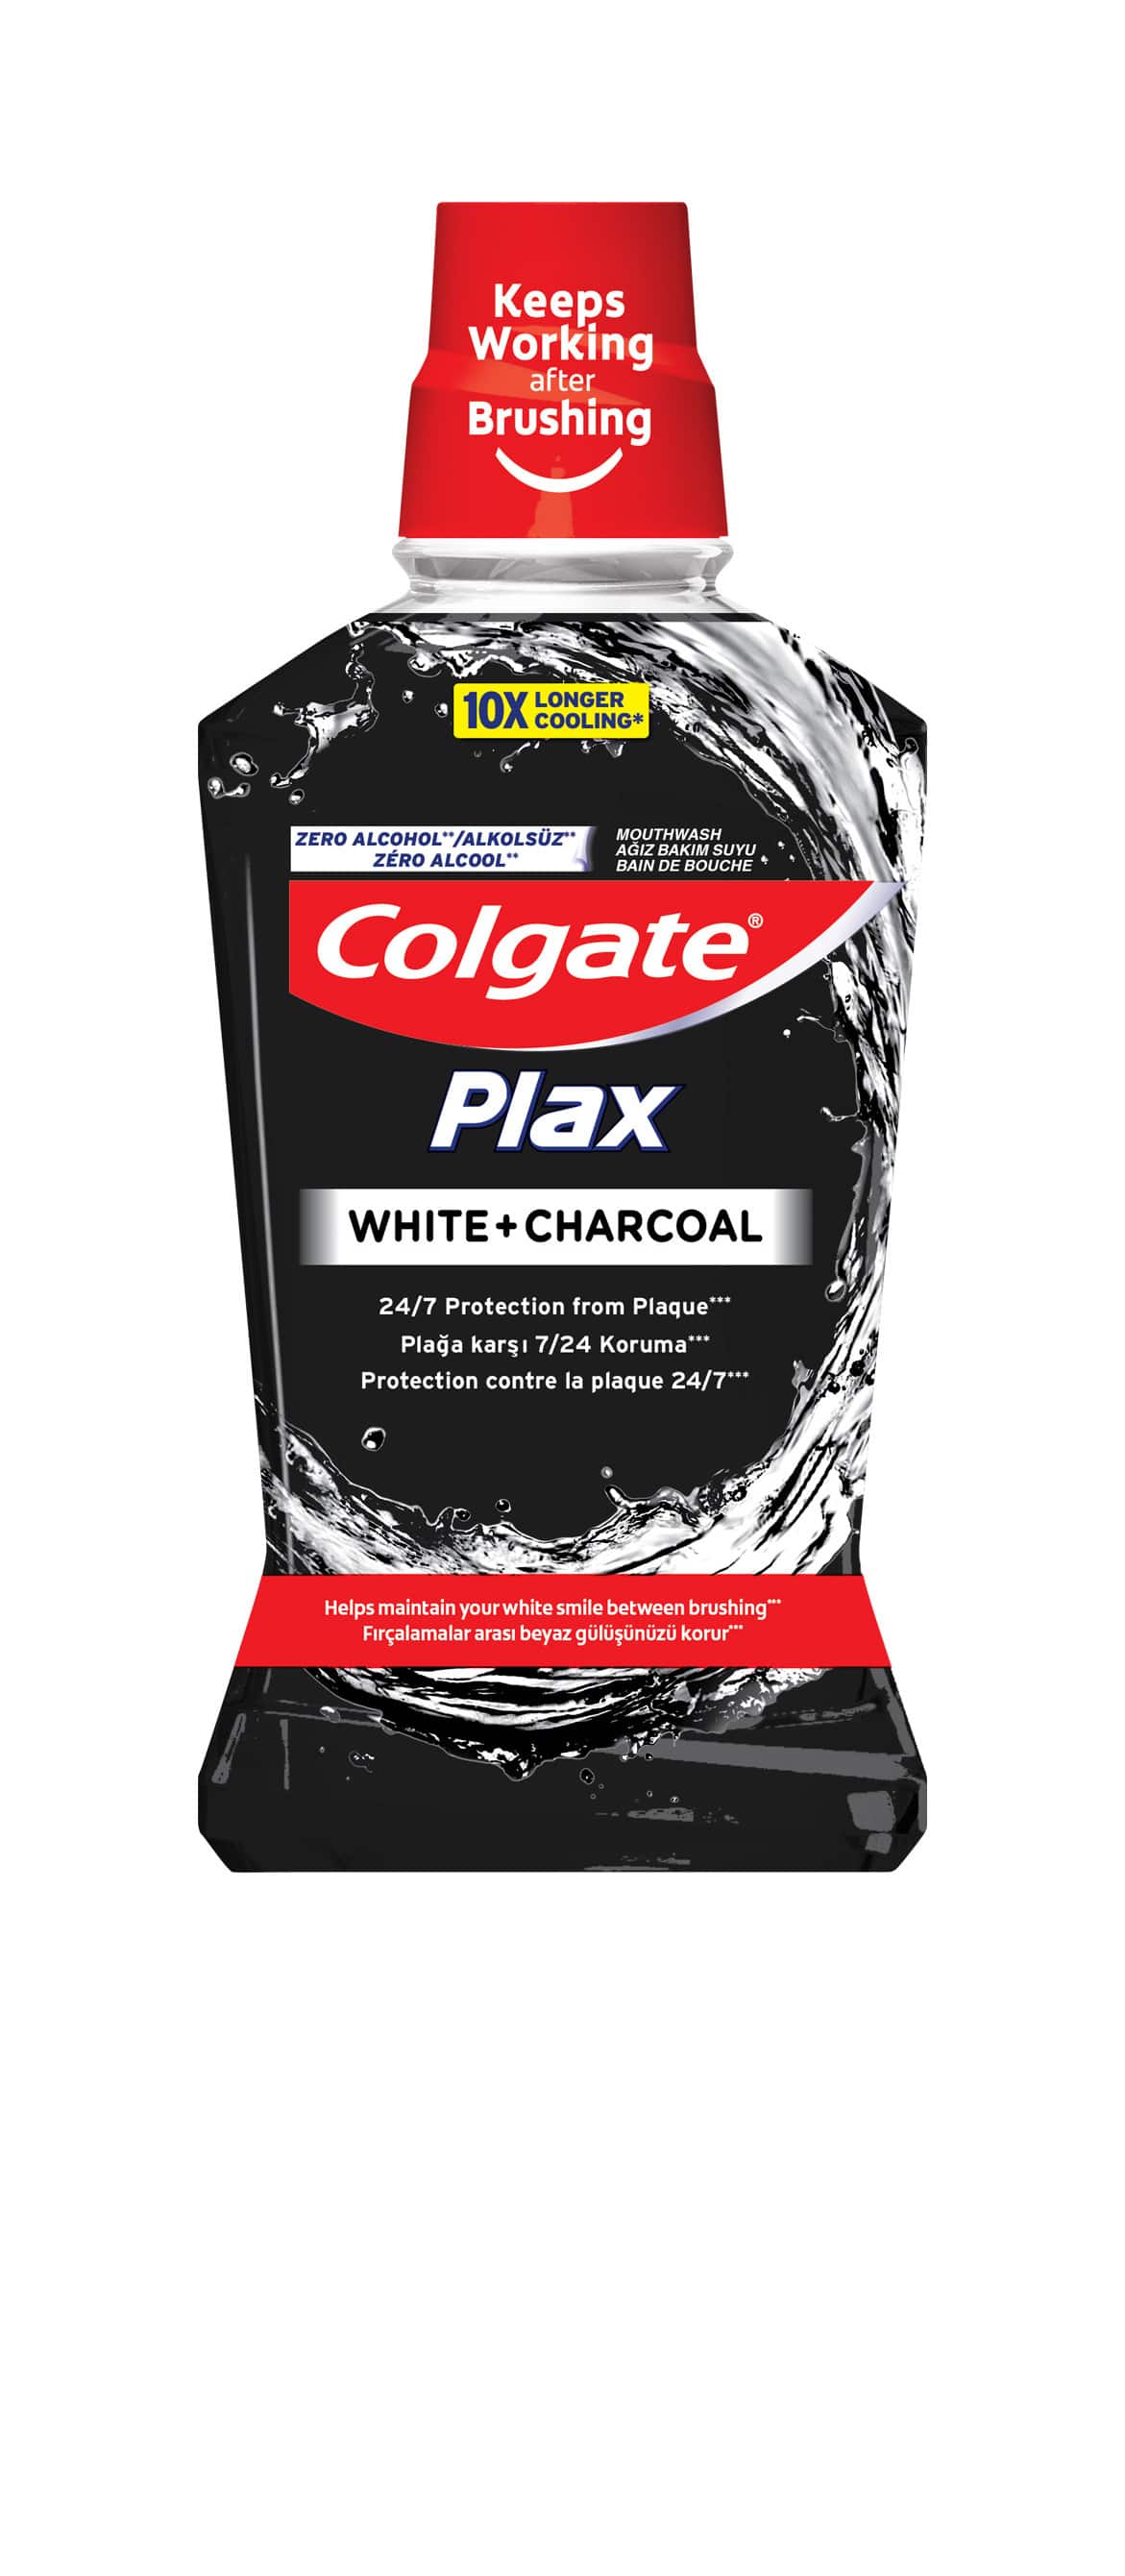 Charcoal Plax Mouthwash